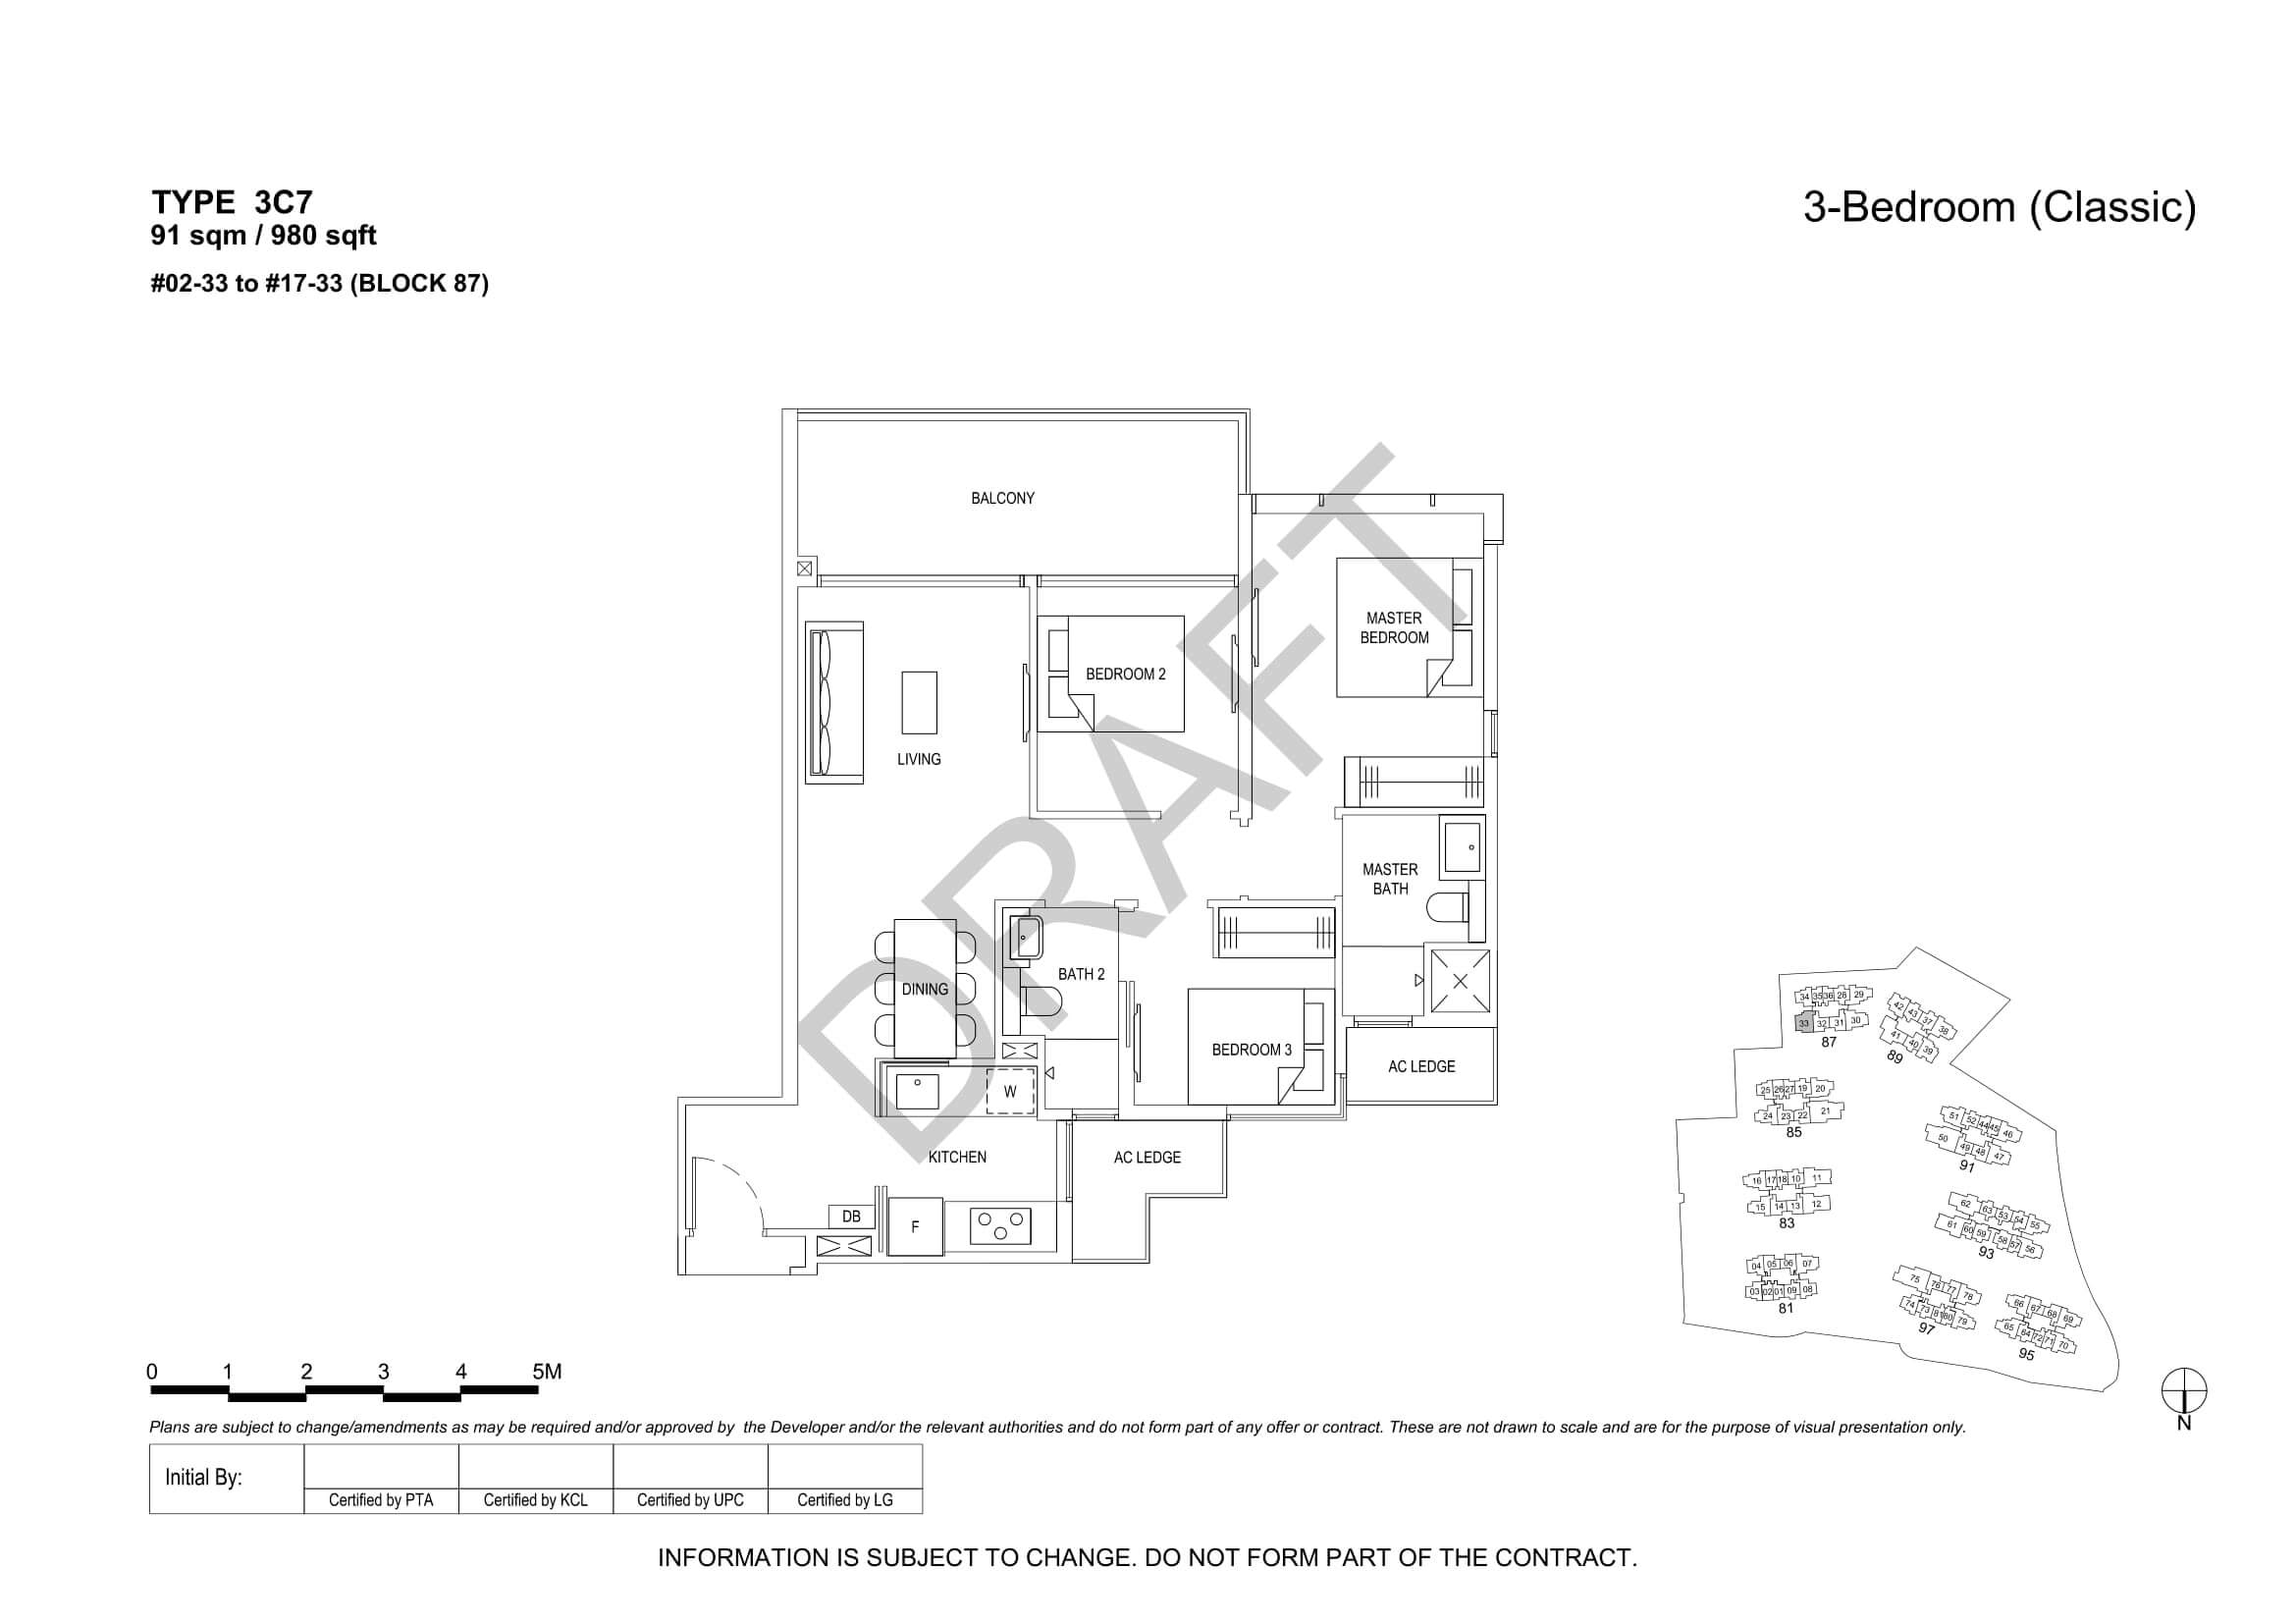 The Florence Residences Floor Plan 3-Bedroom Type 3C7